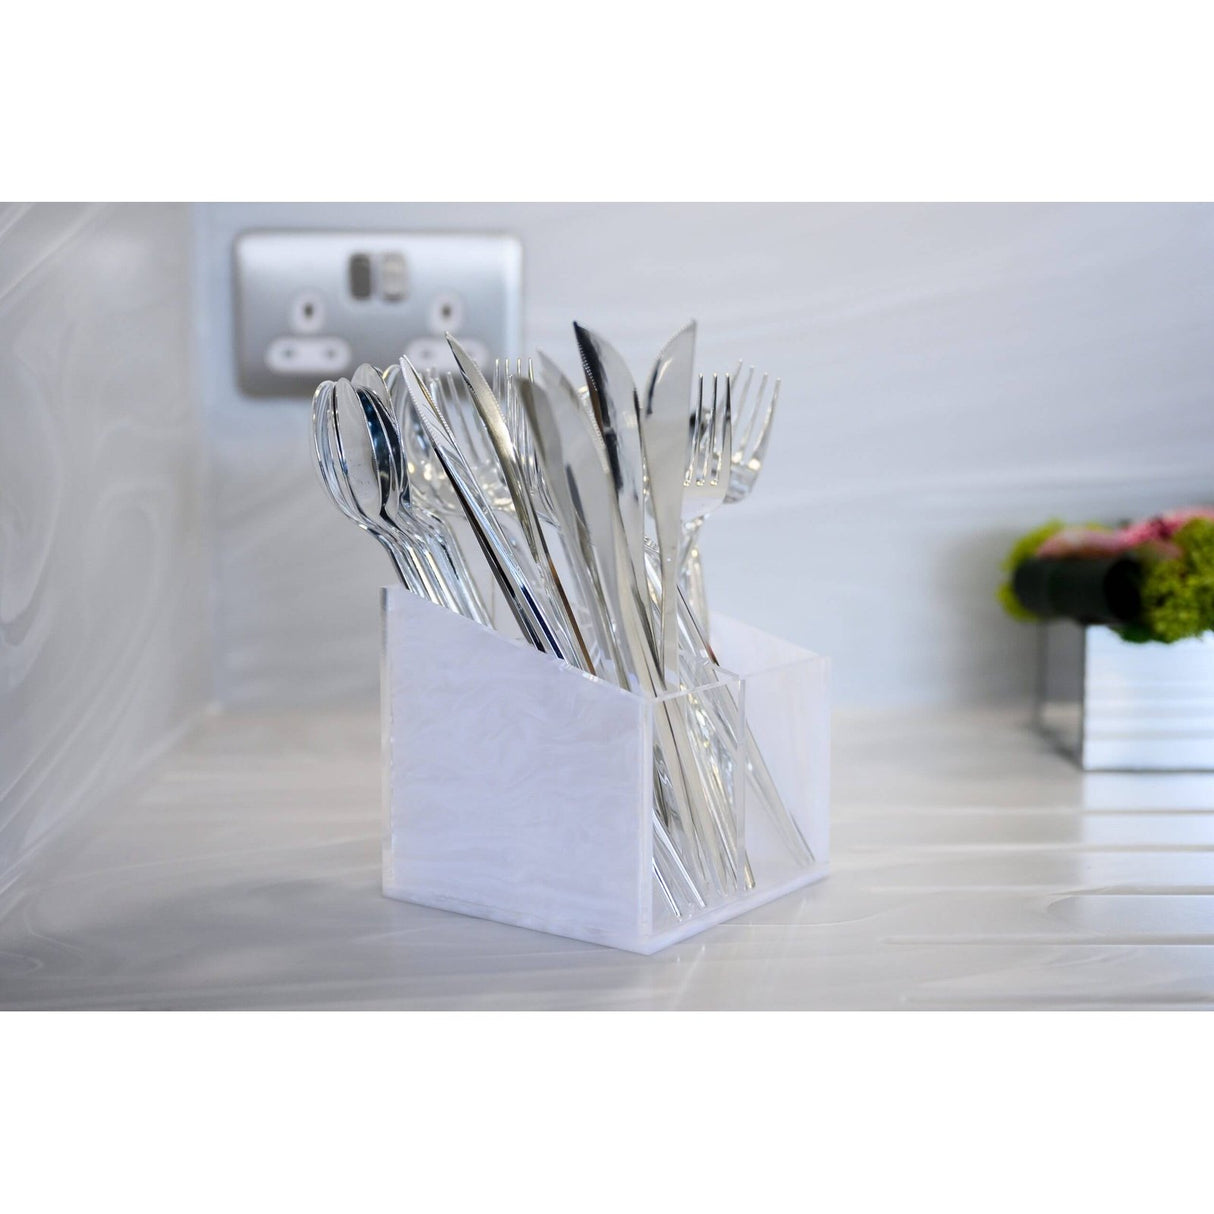 Multi Purpose Organiser - Acrylic Cutlery Holder White Pearl